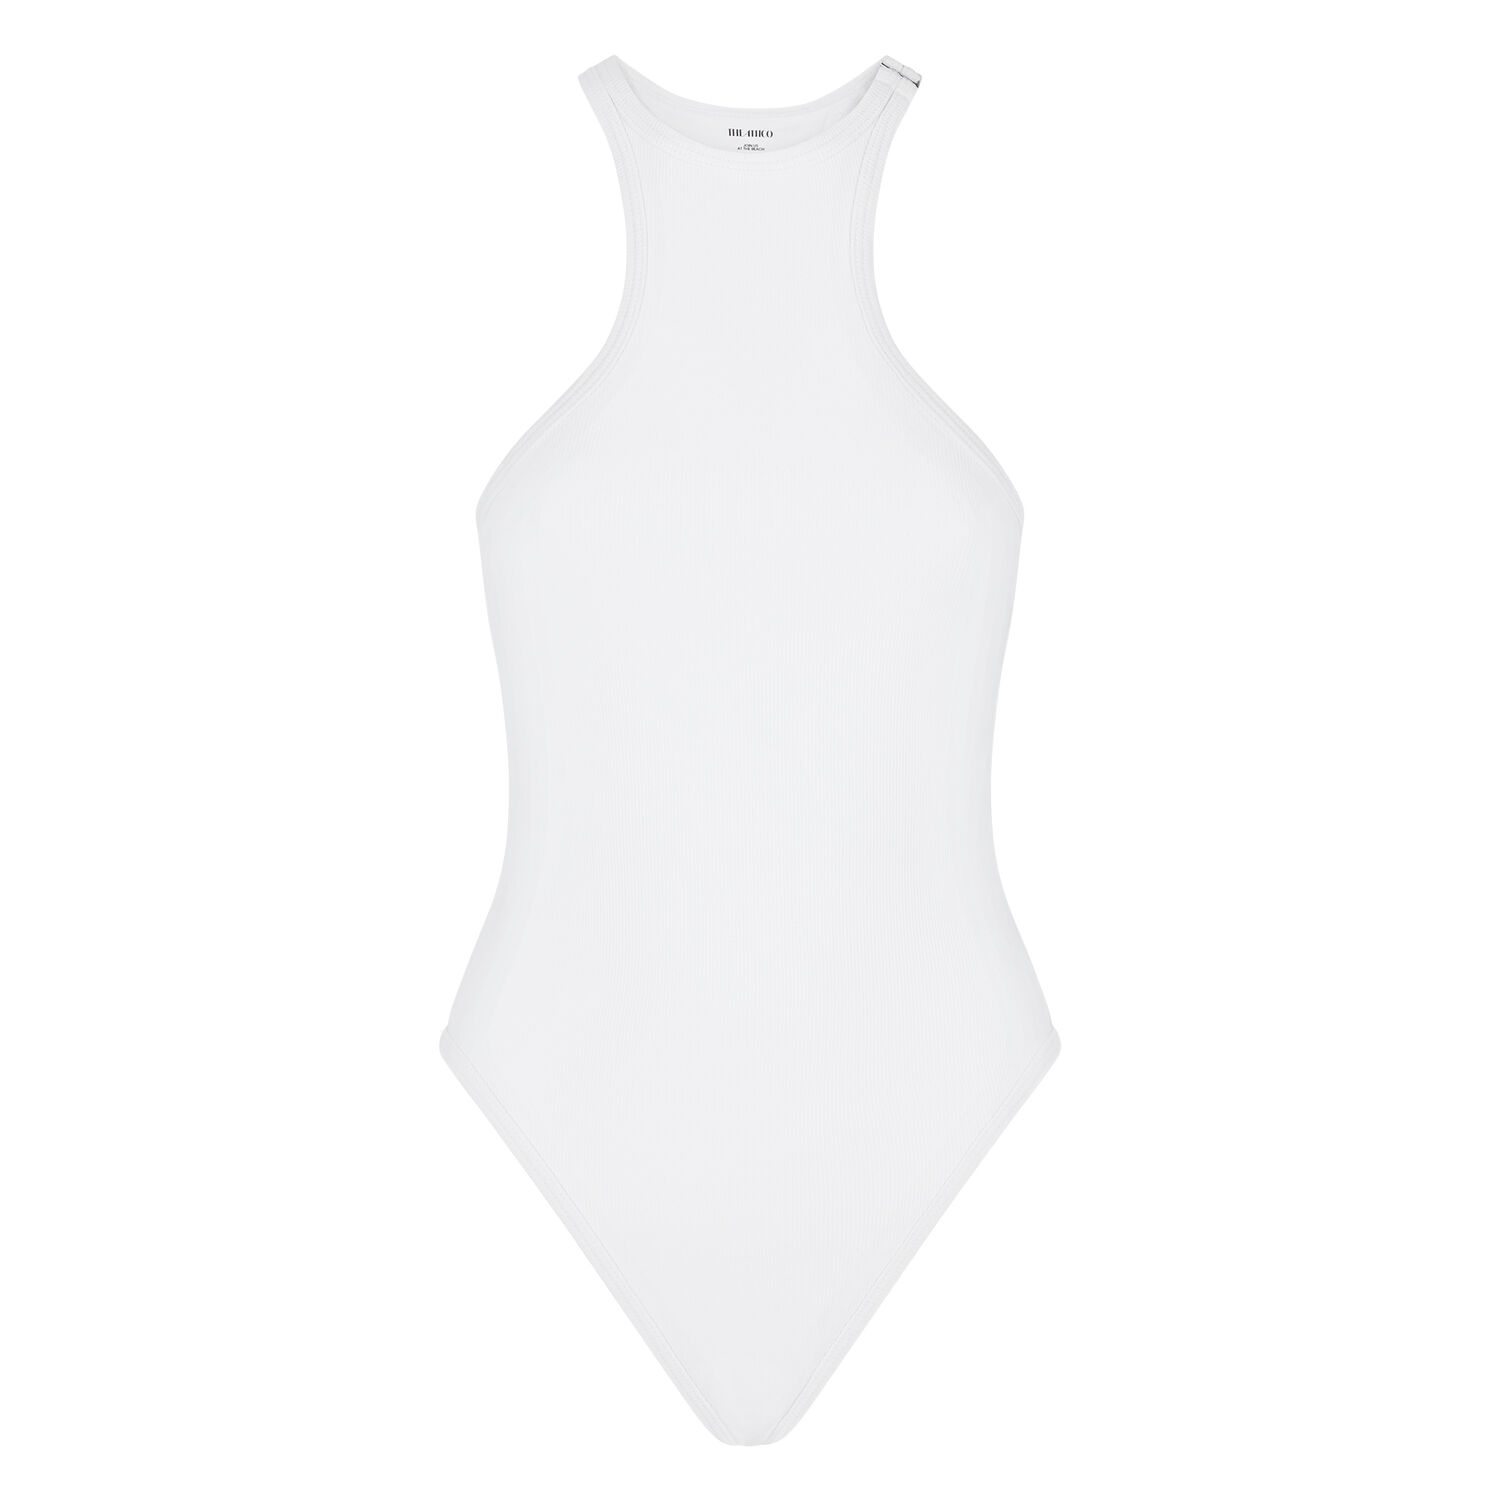 Scorpio White One-Piece Swimsuit